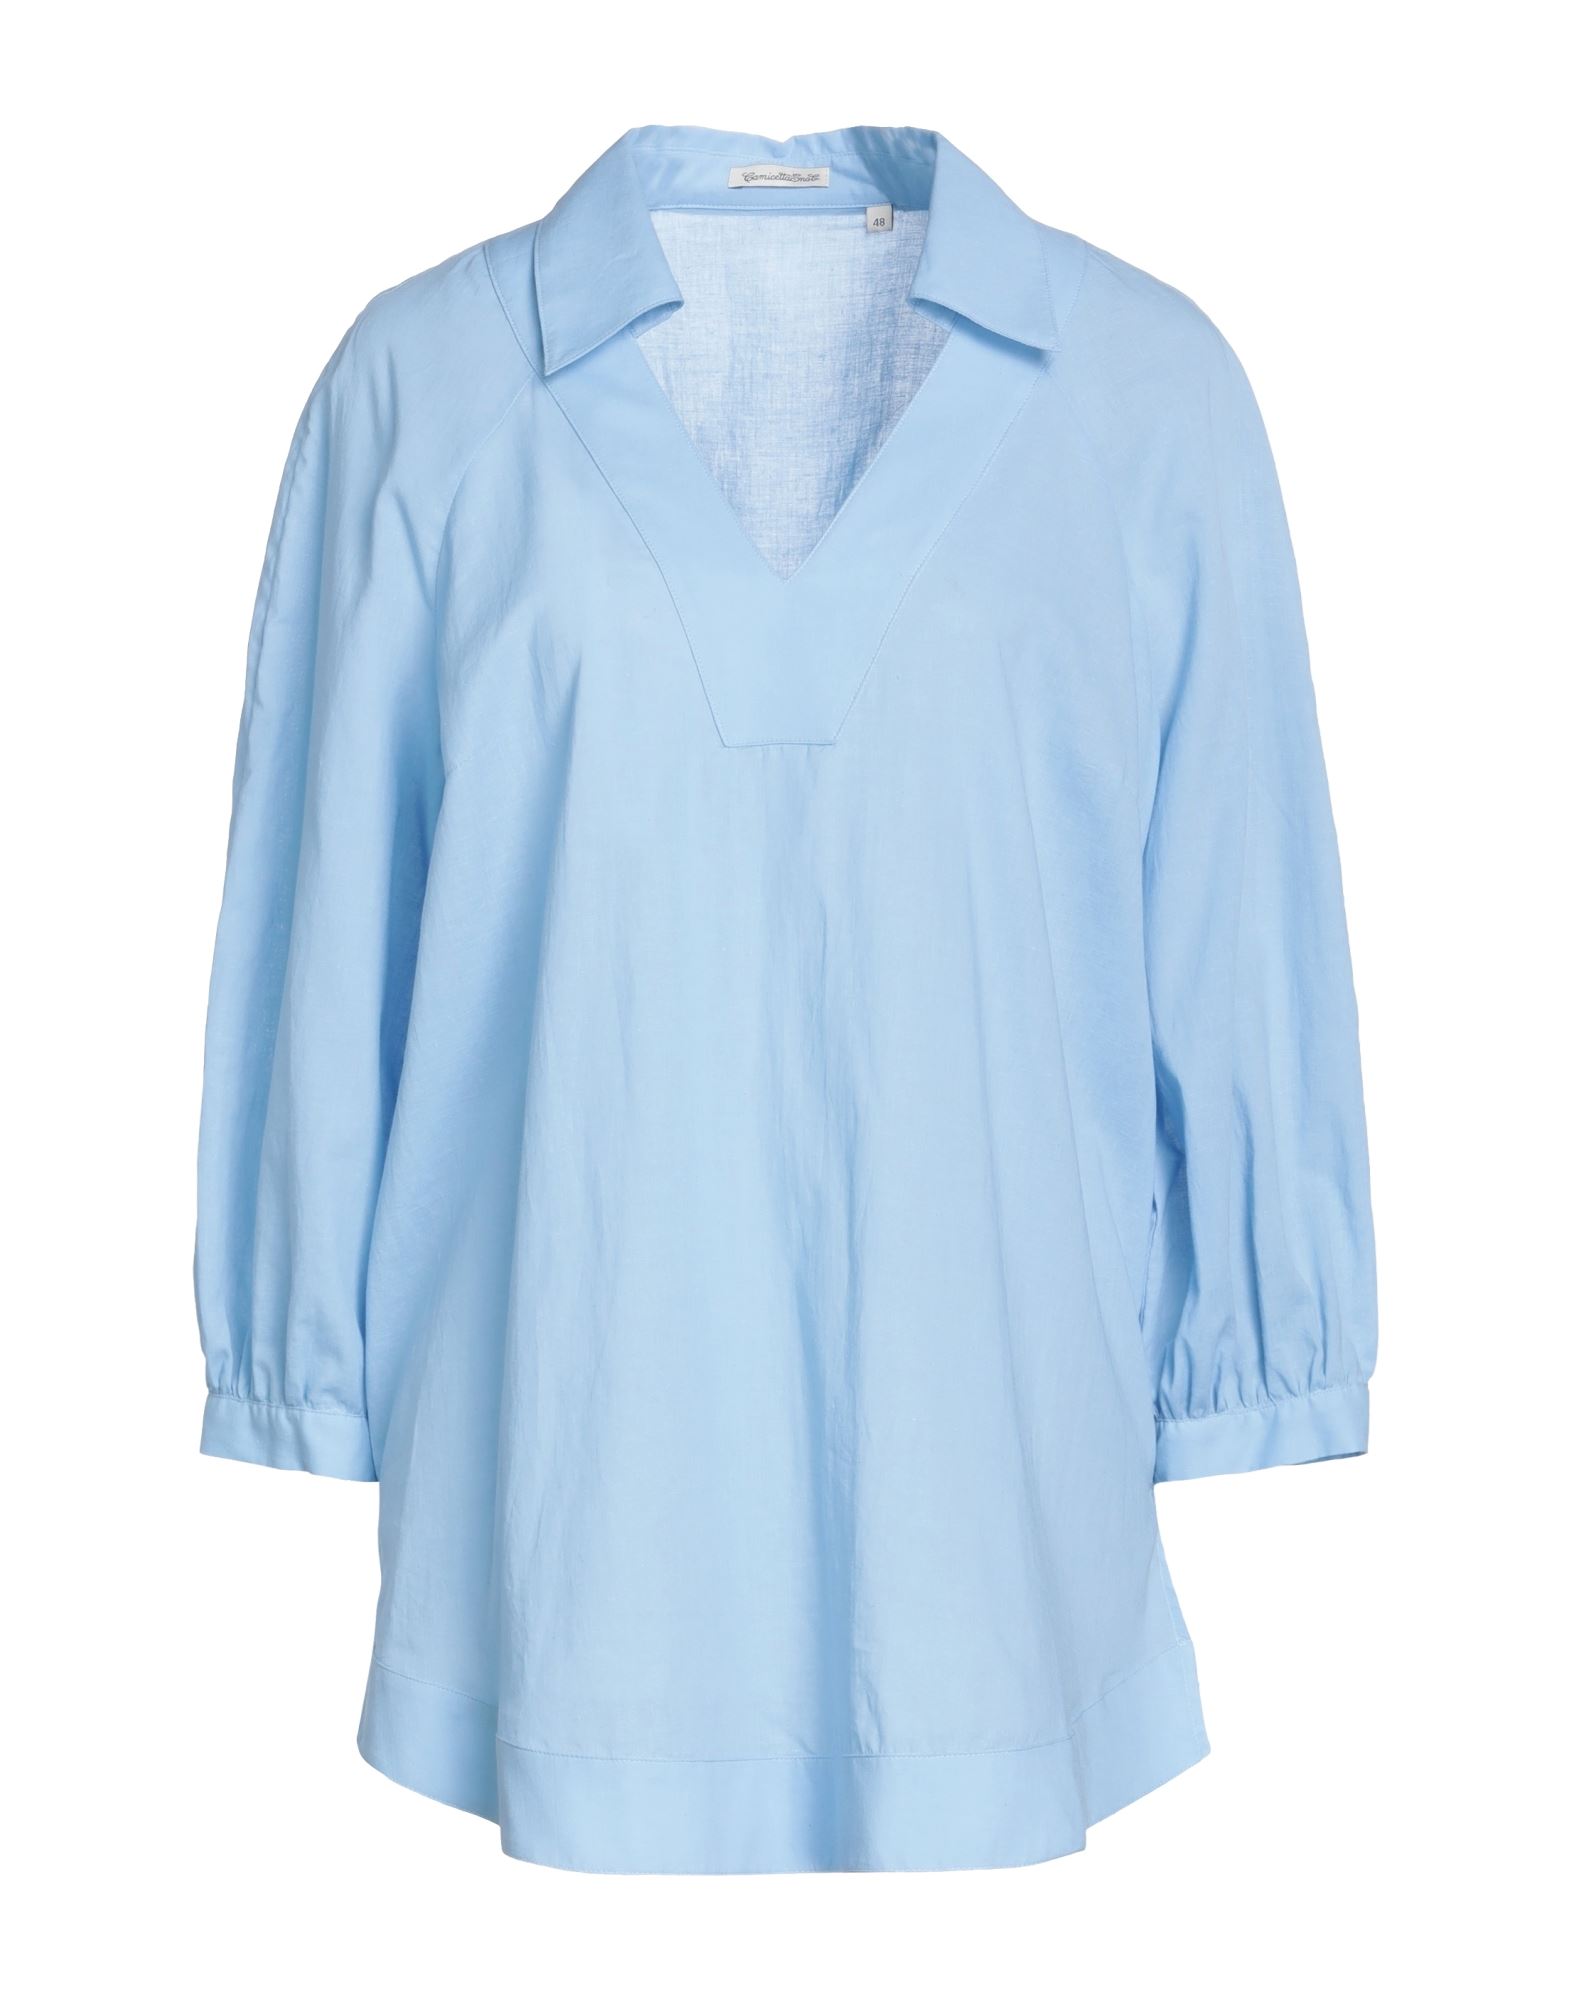 CAMICETTASNOB, Slate blue Women's Patterned Shirts & Blouses